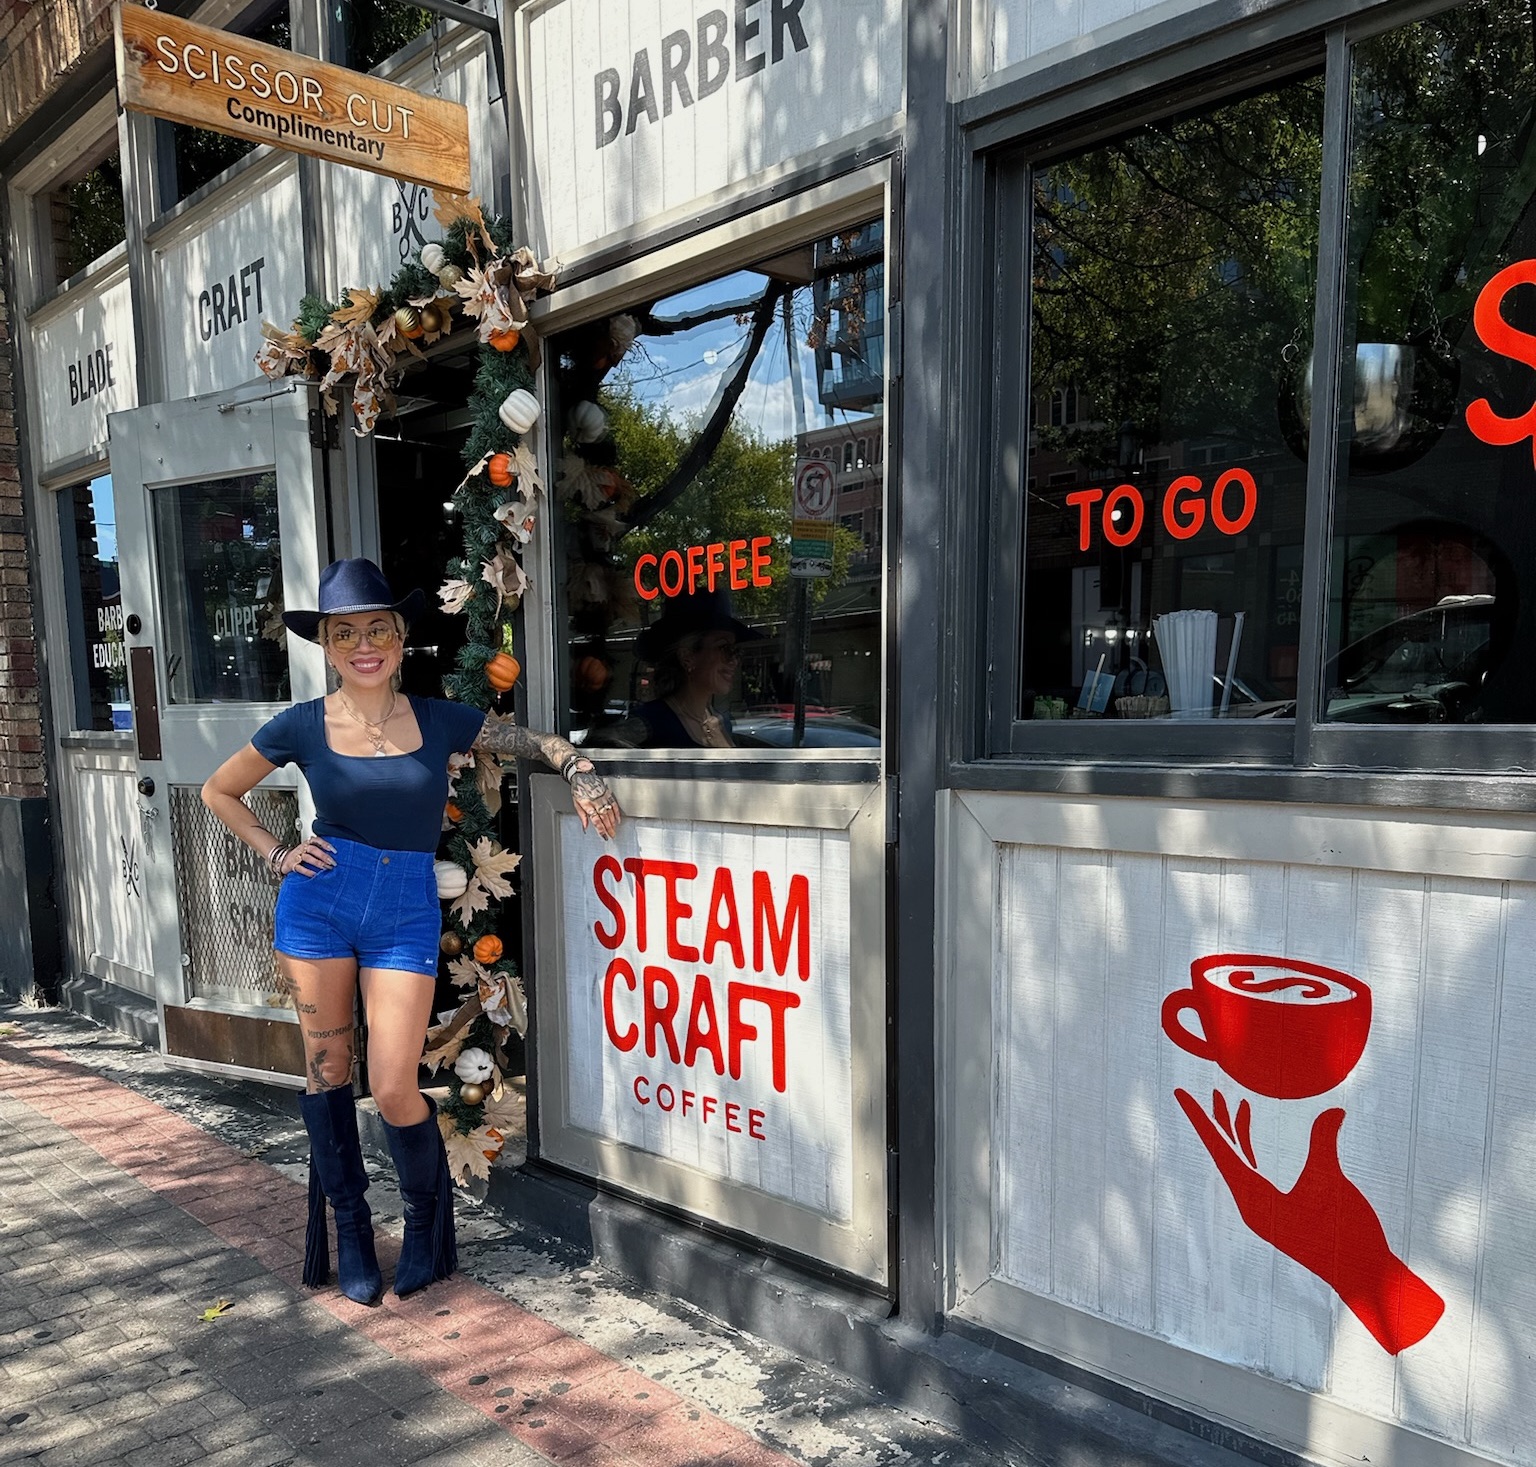 Steam Craft Coffee